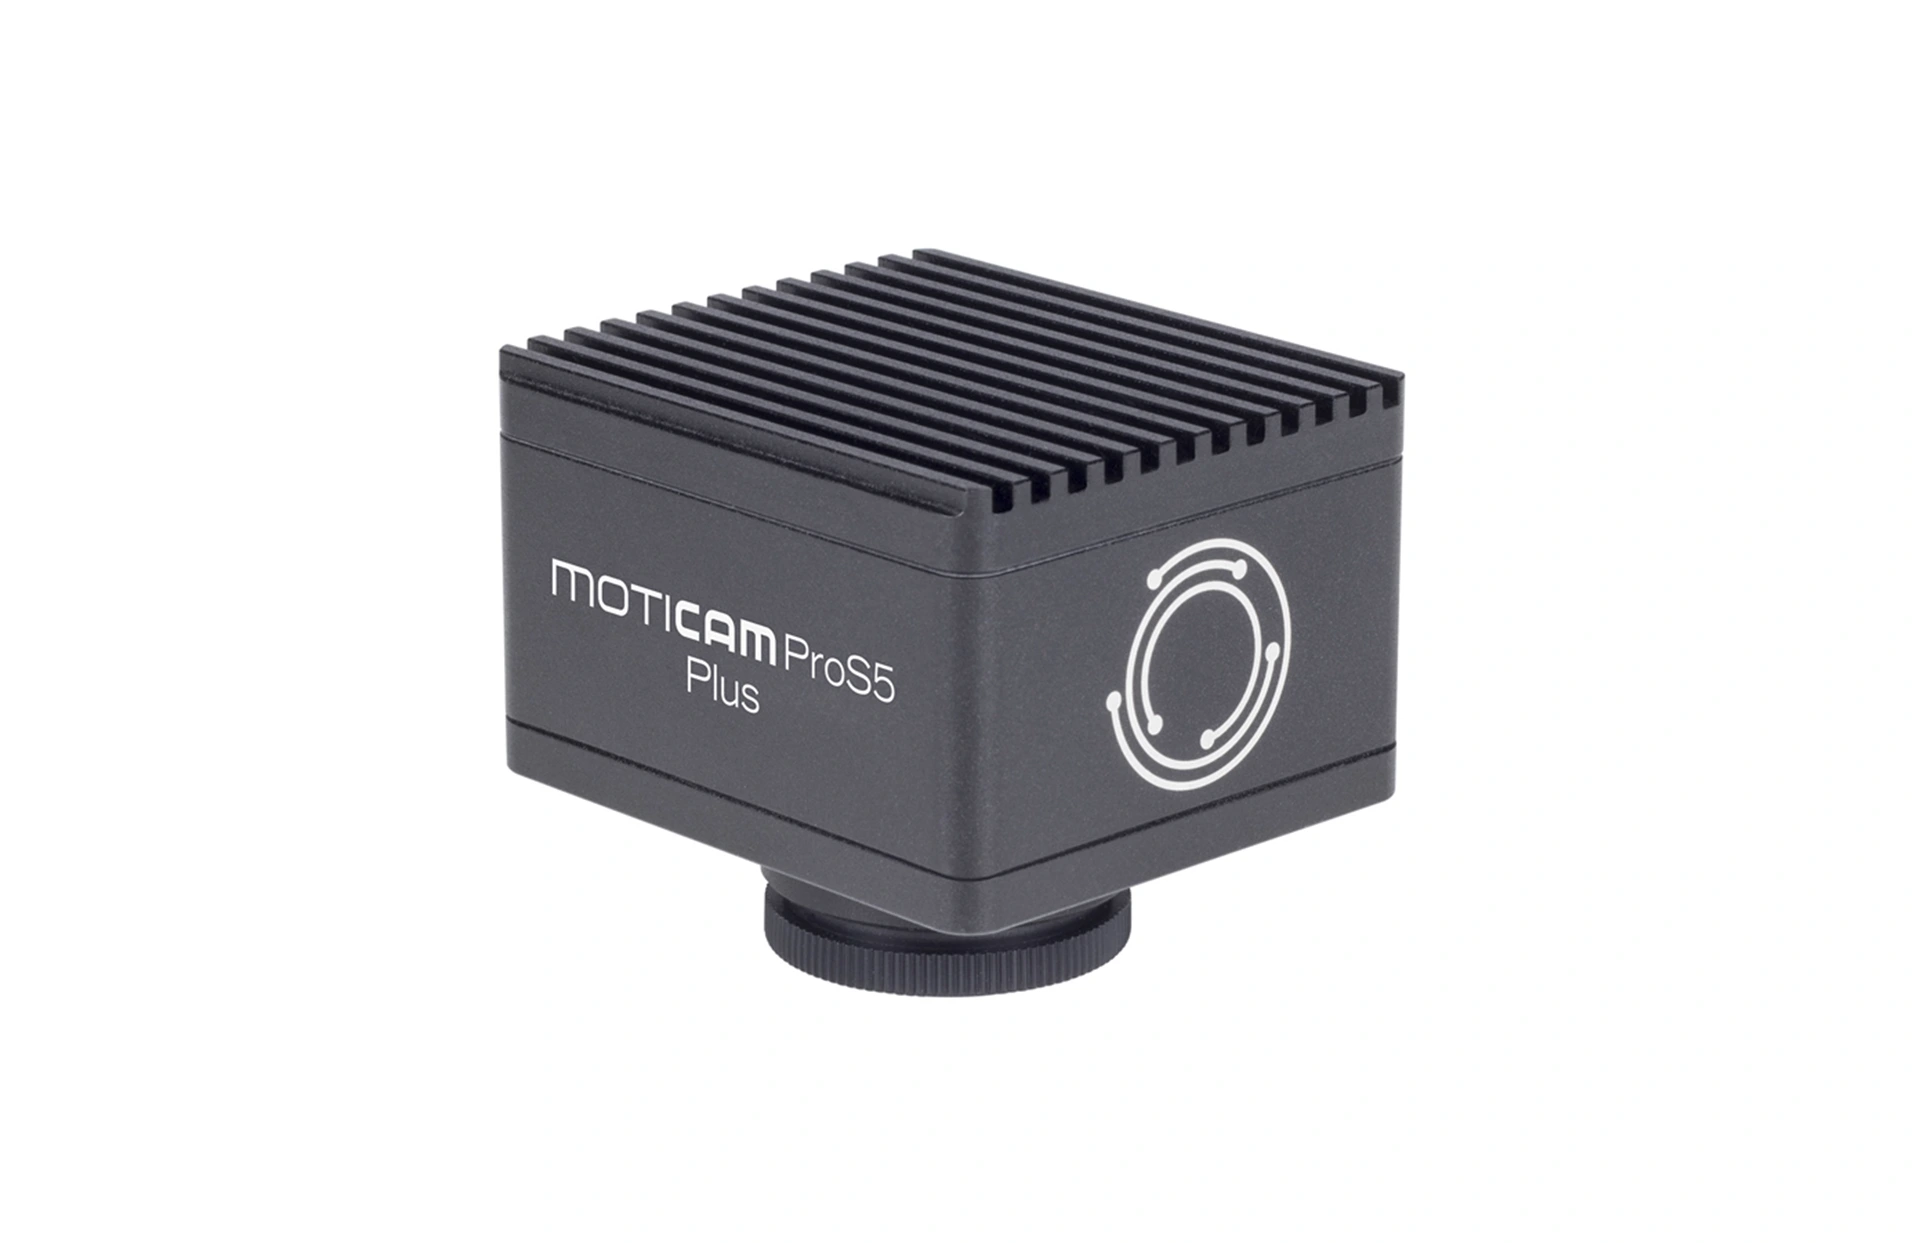 Motic Moticam Pro S5 Plus, rechtsseitig